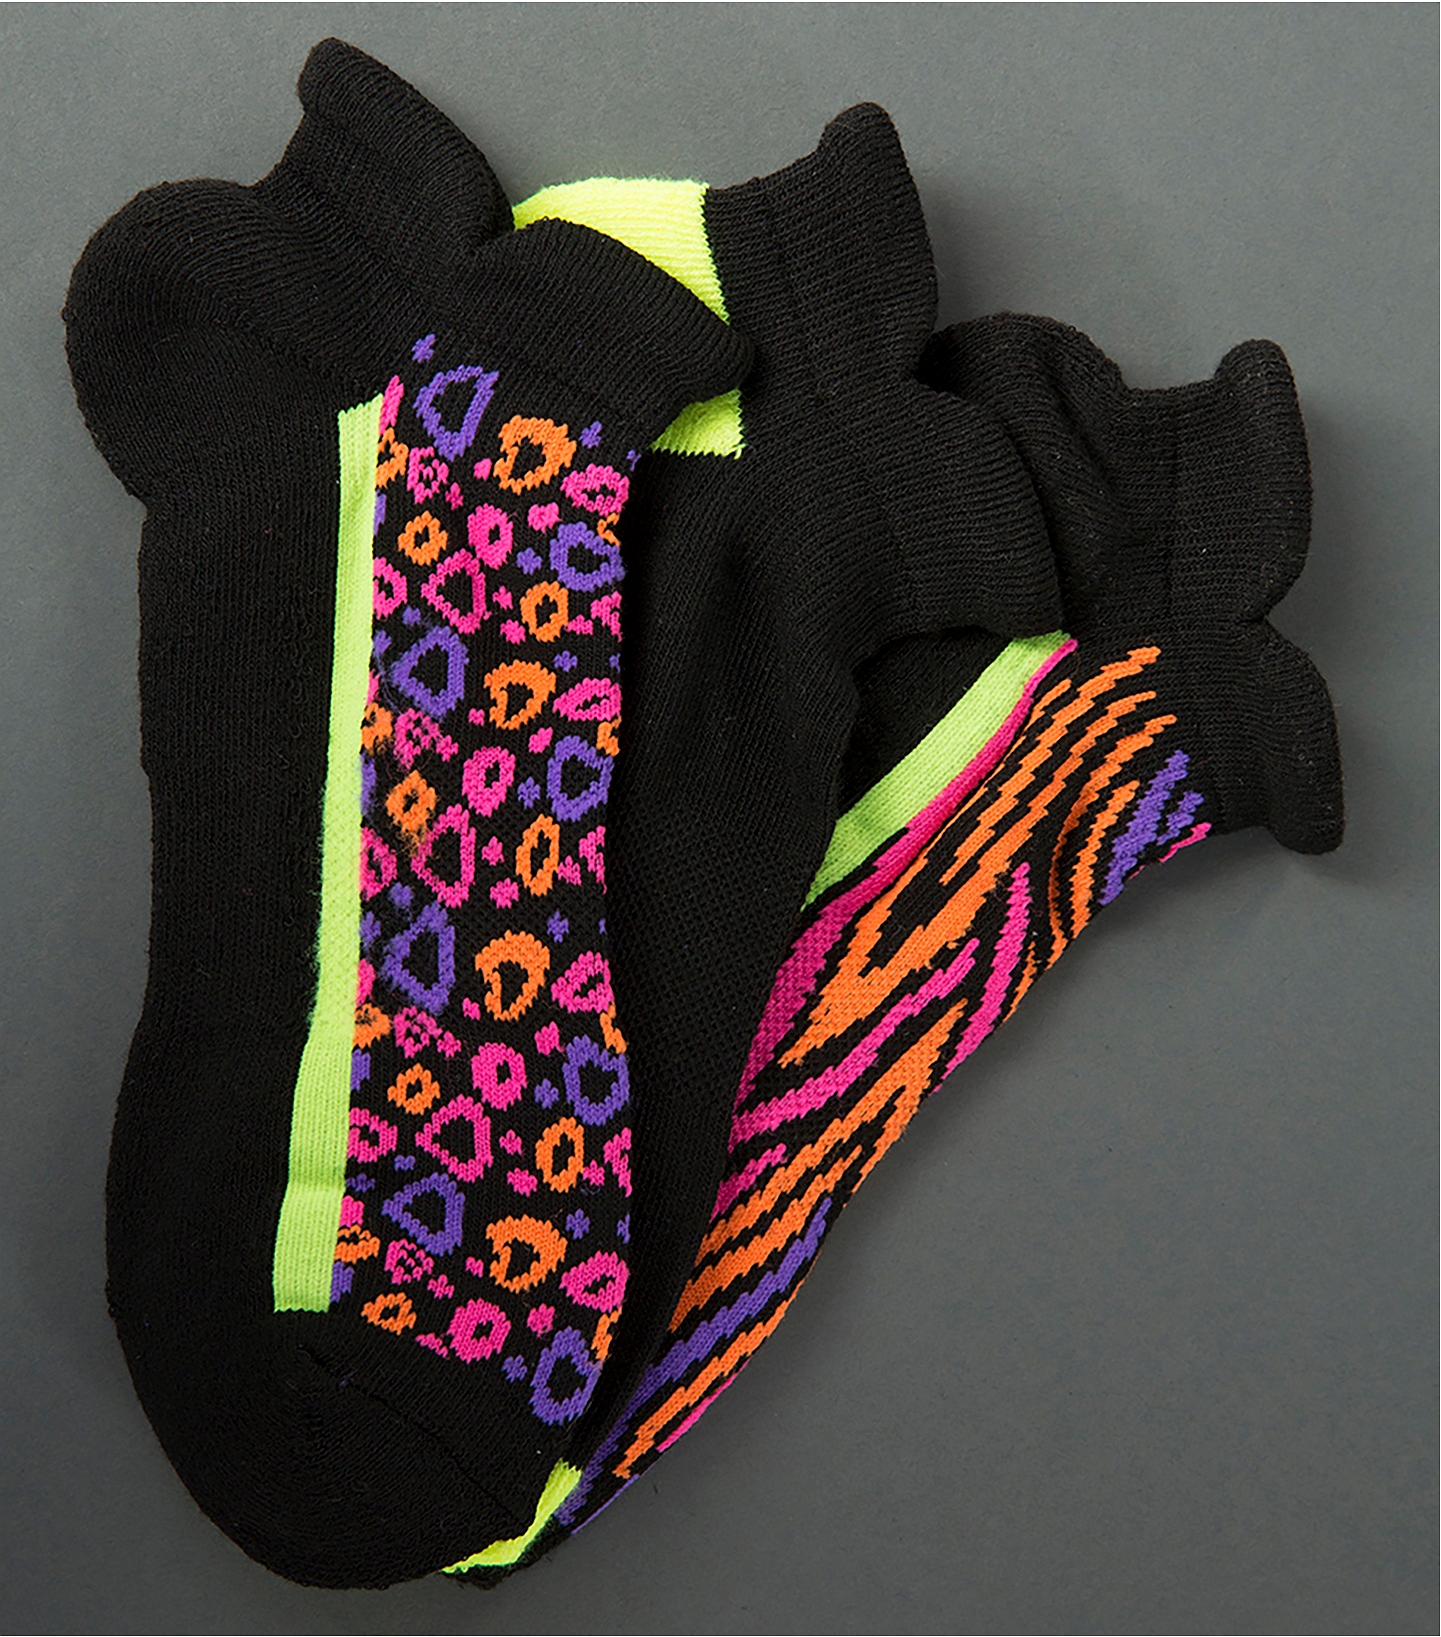 Smitten Set of 3 Pairs of Tab Top Socks S403004